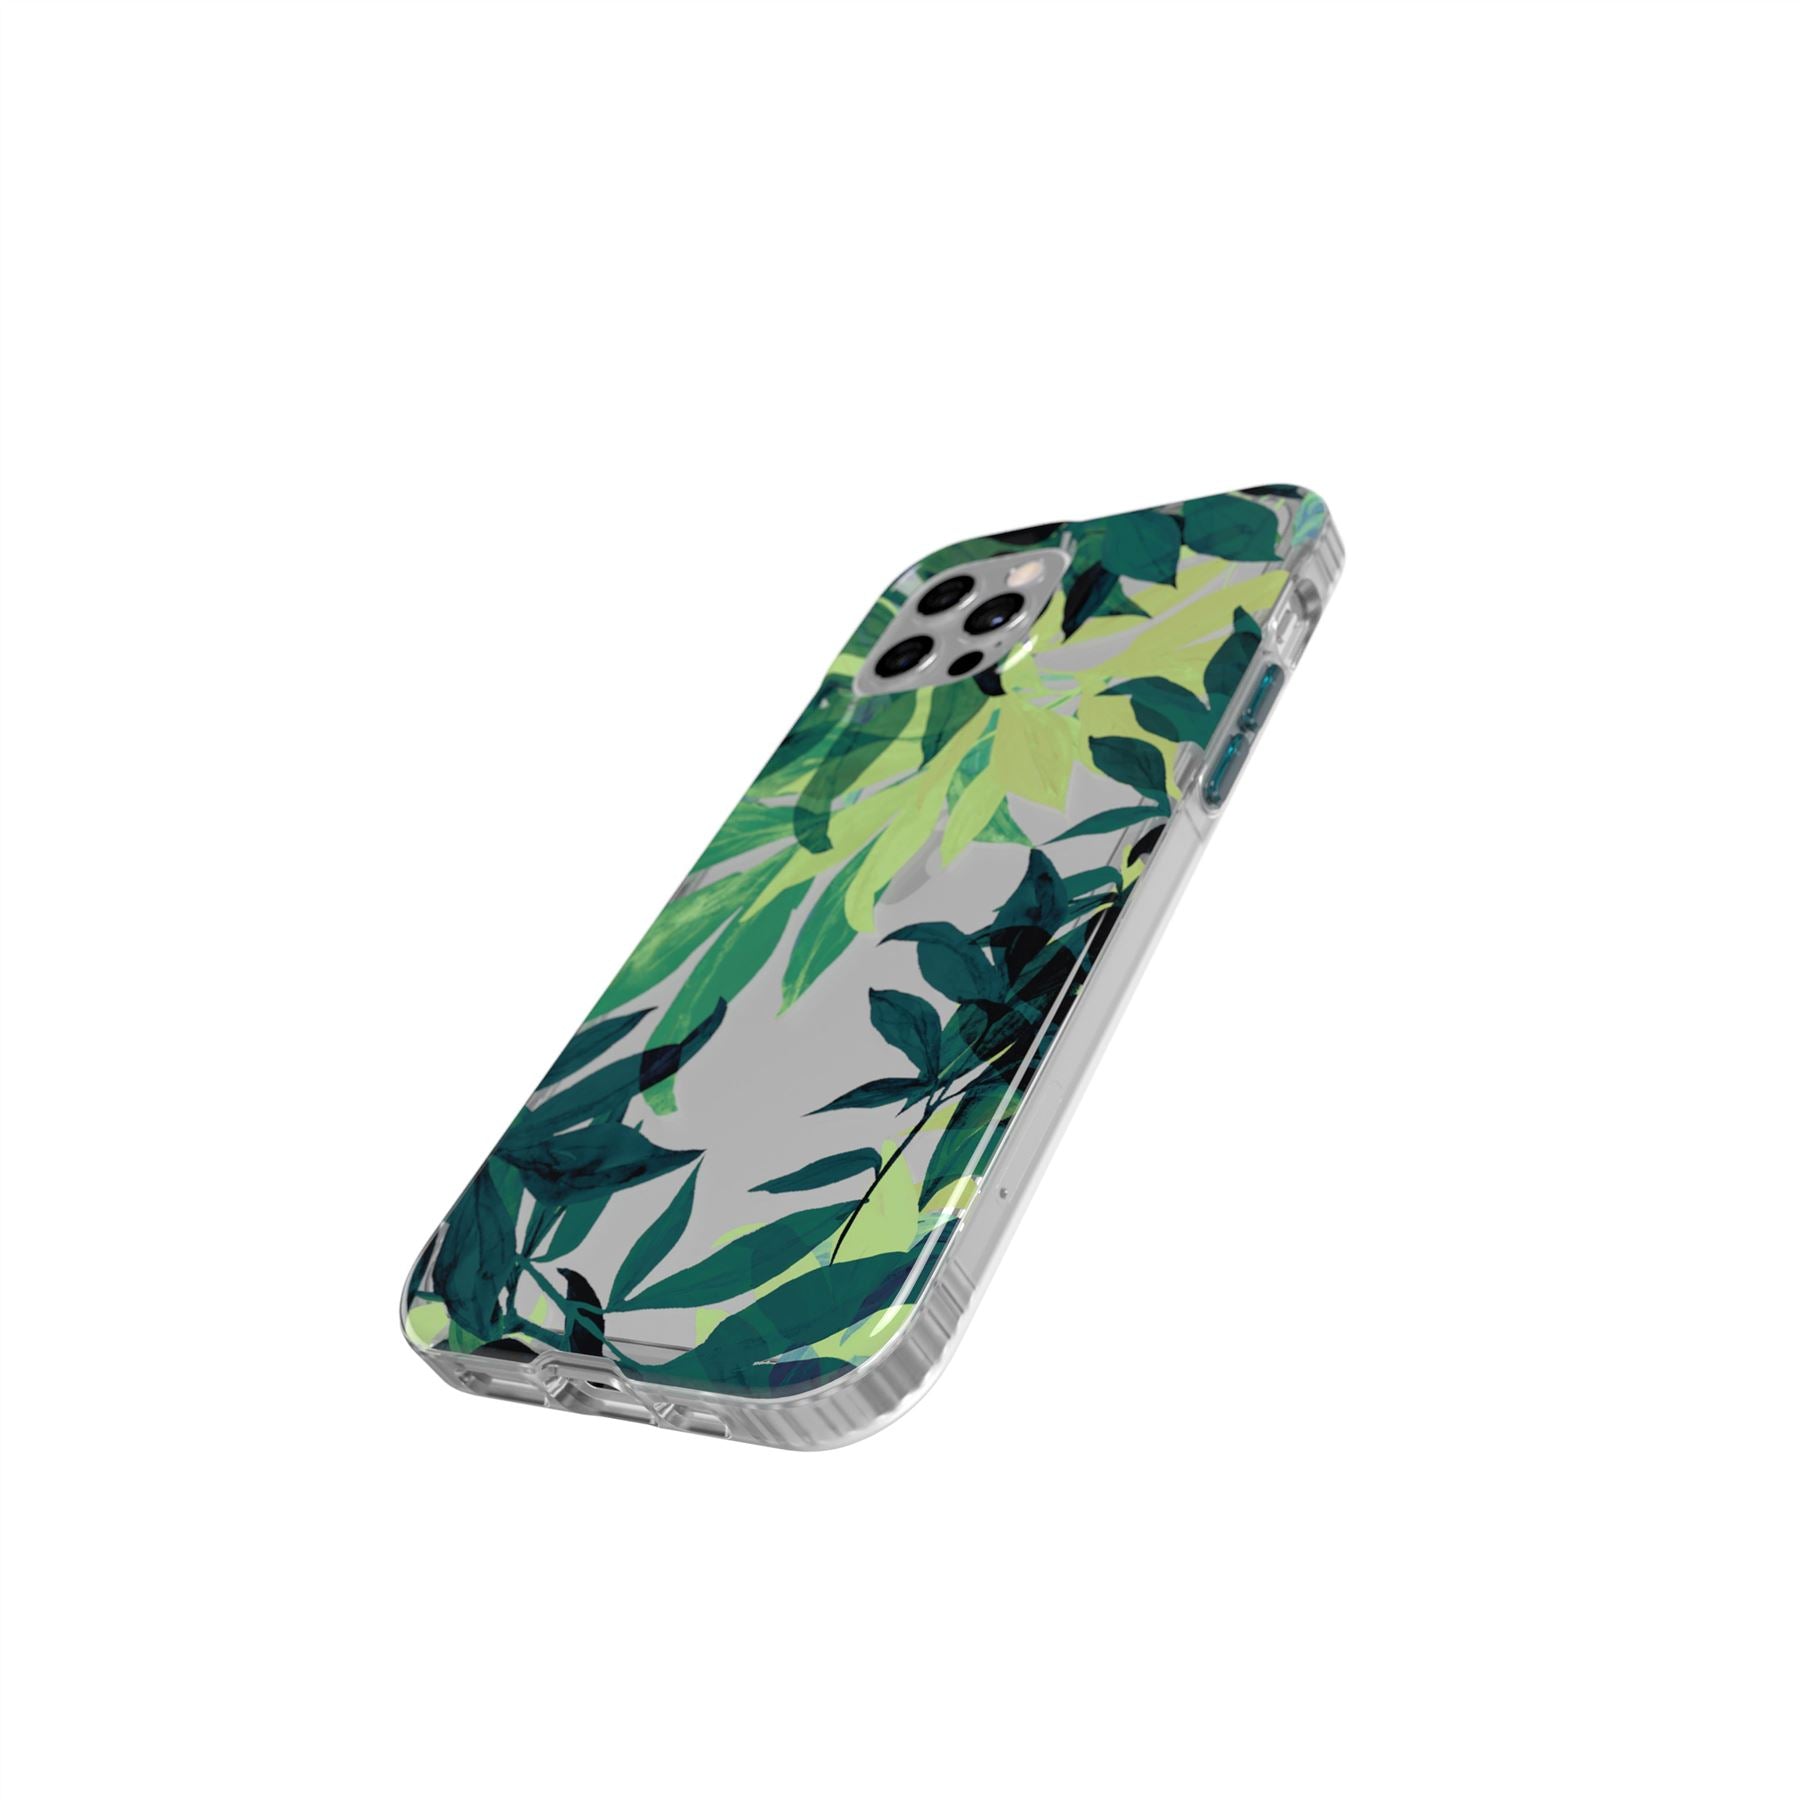 Evo Art - Apple iPhone 12/12 Pro Case - Forest Green